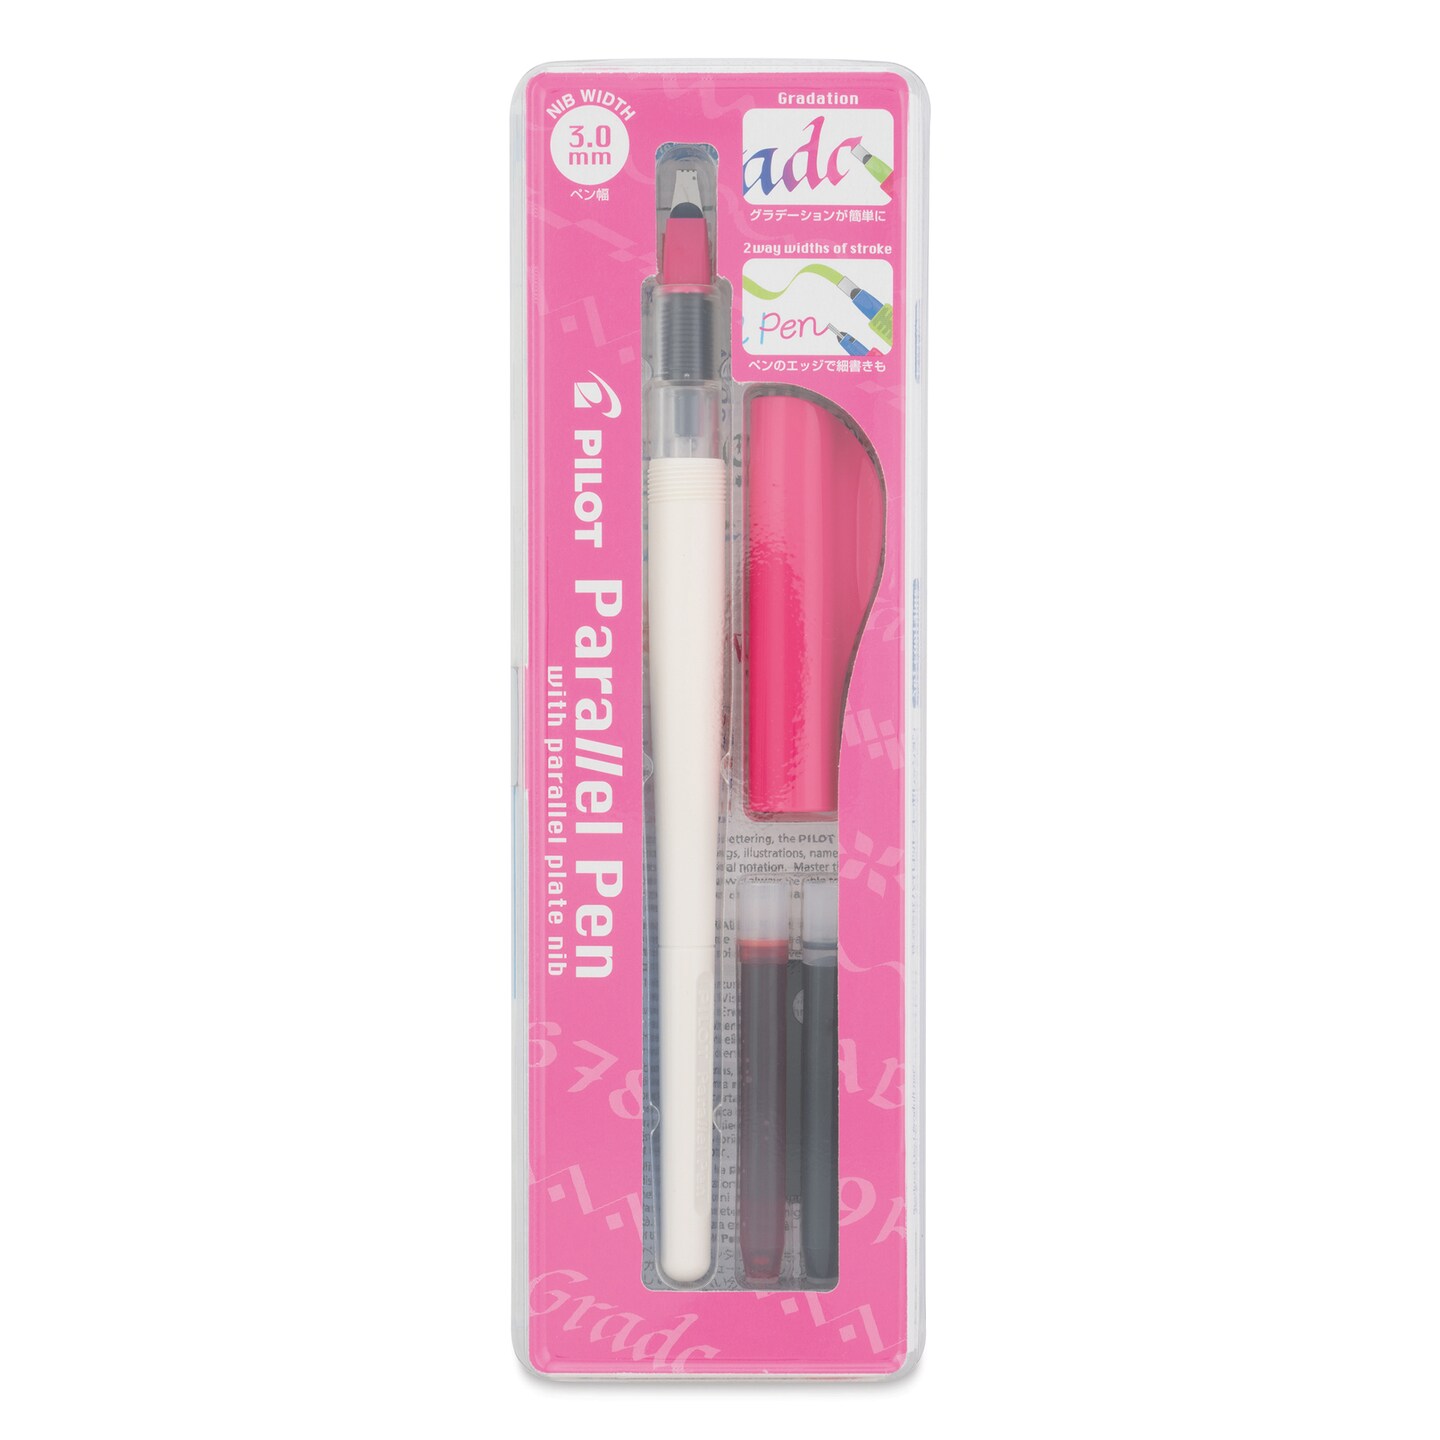 Pilot Parallel Calligraphy Pen Set - 3.0 mm Pen Nib with Ink Cartridges